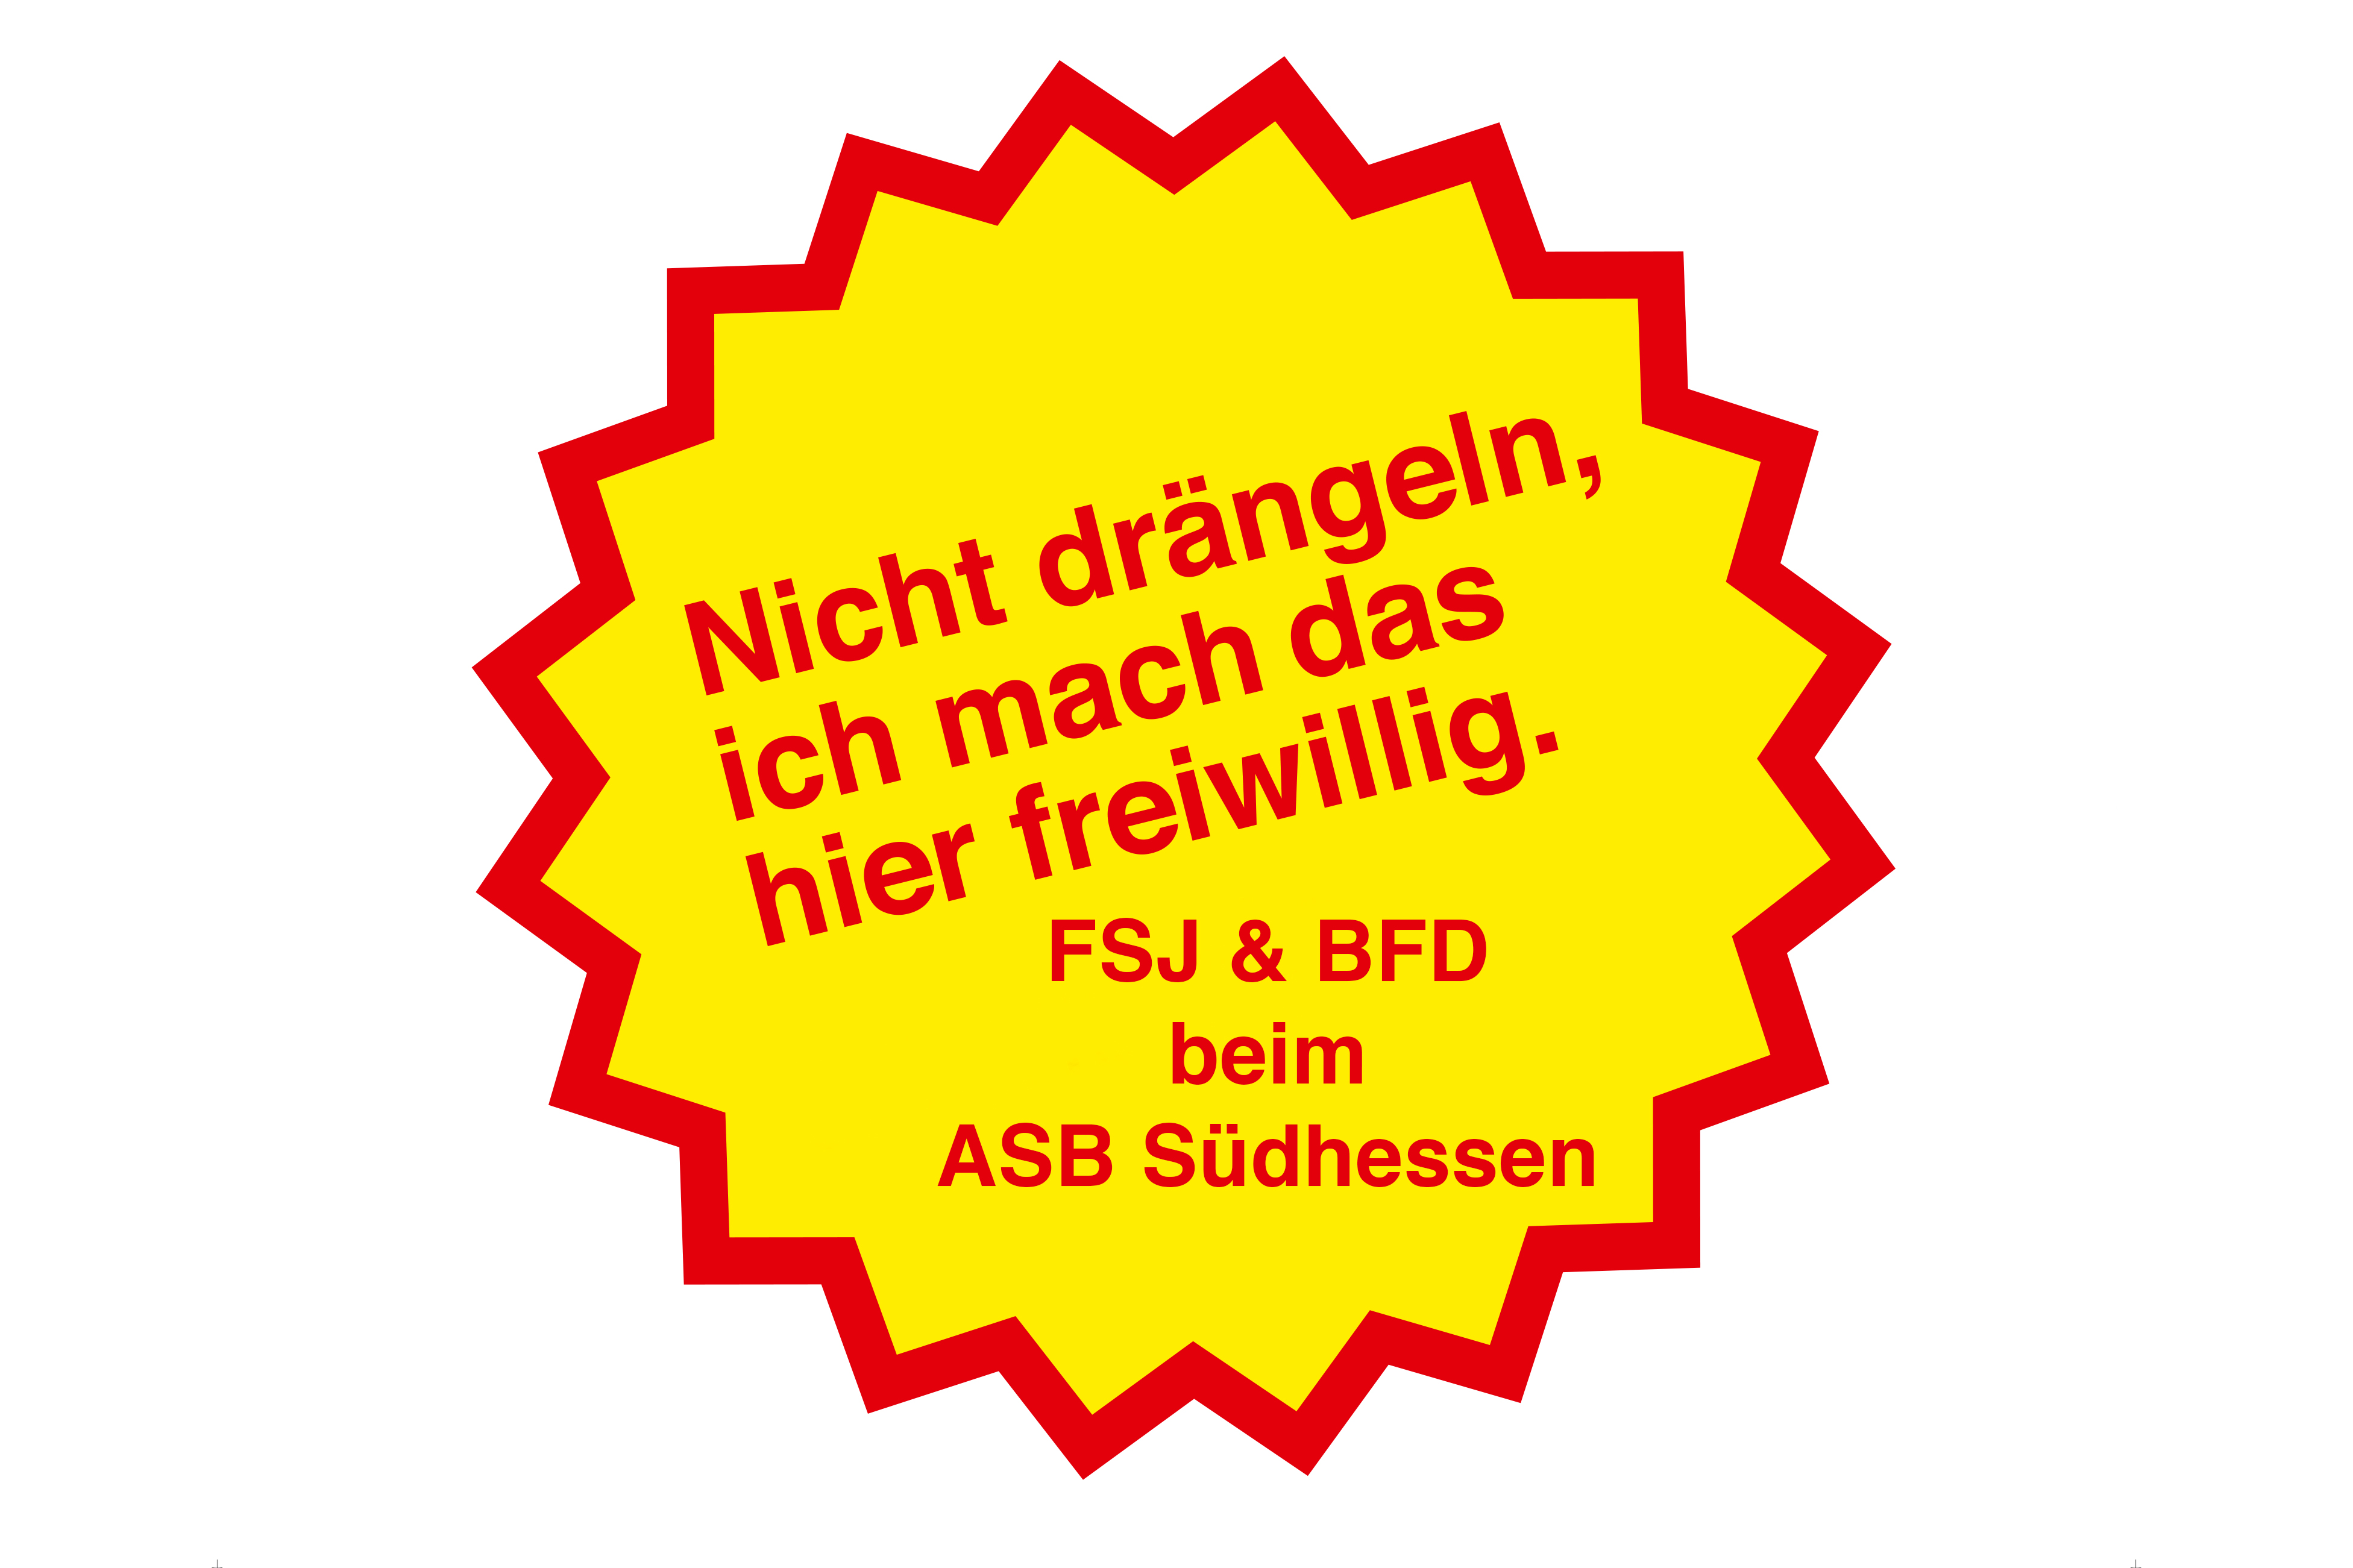 FSJ & BFD beim ASB Südhessen